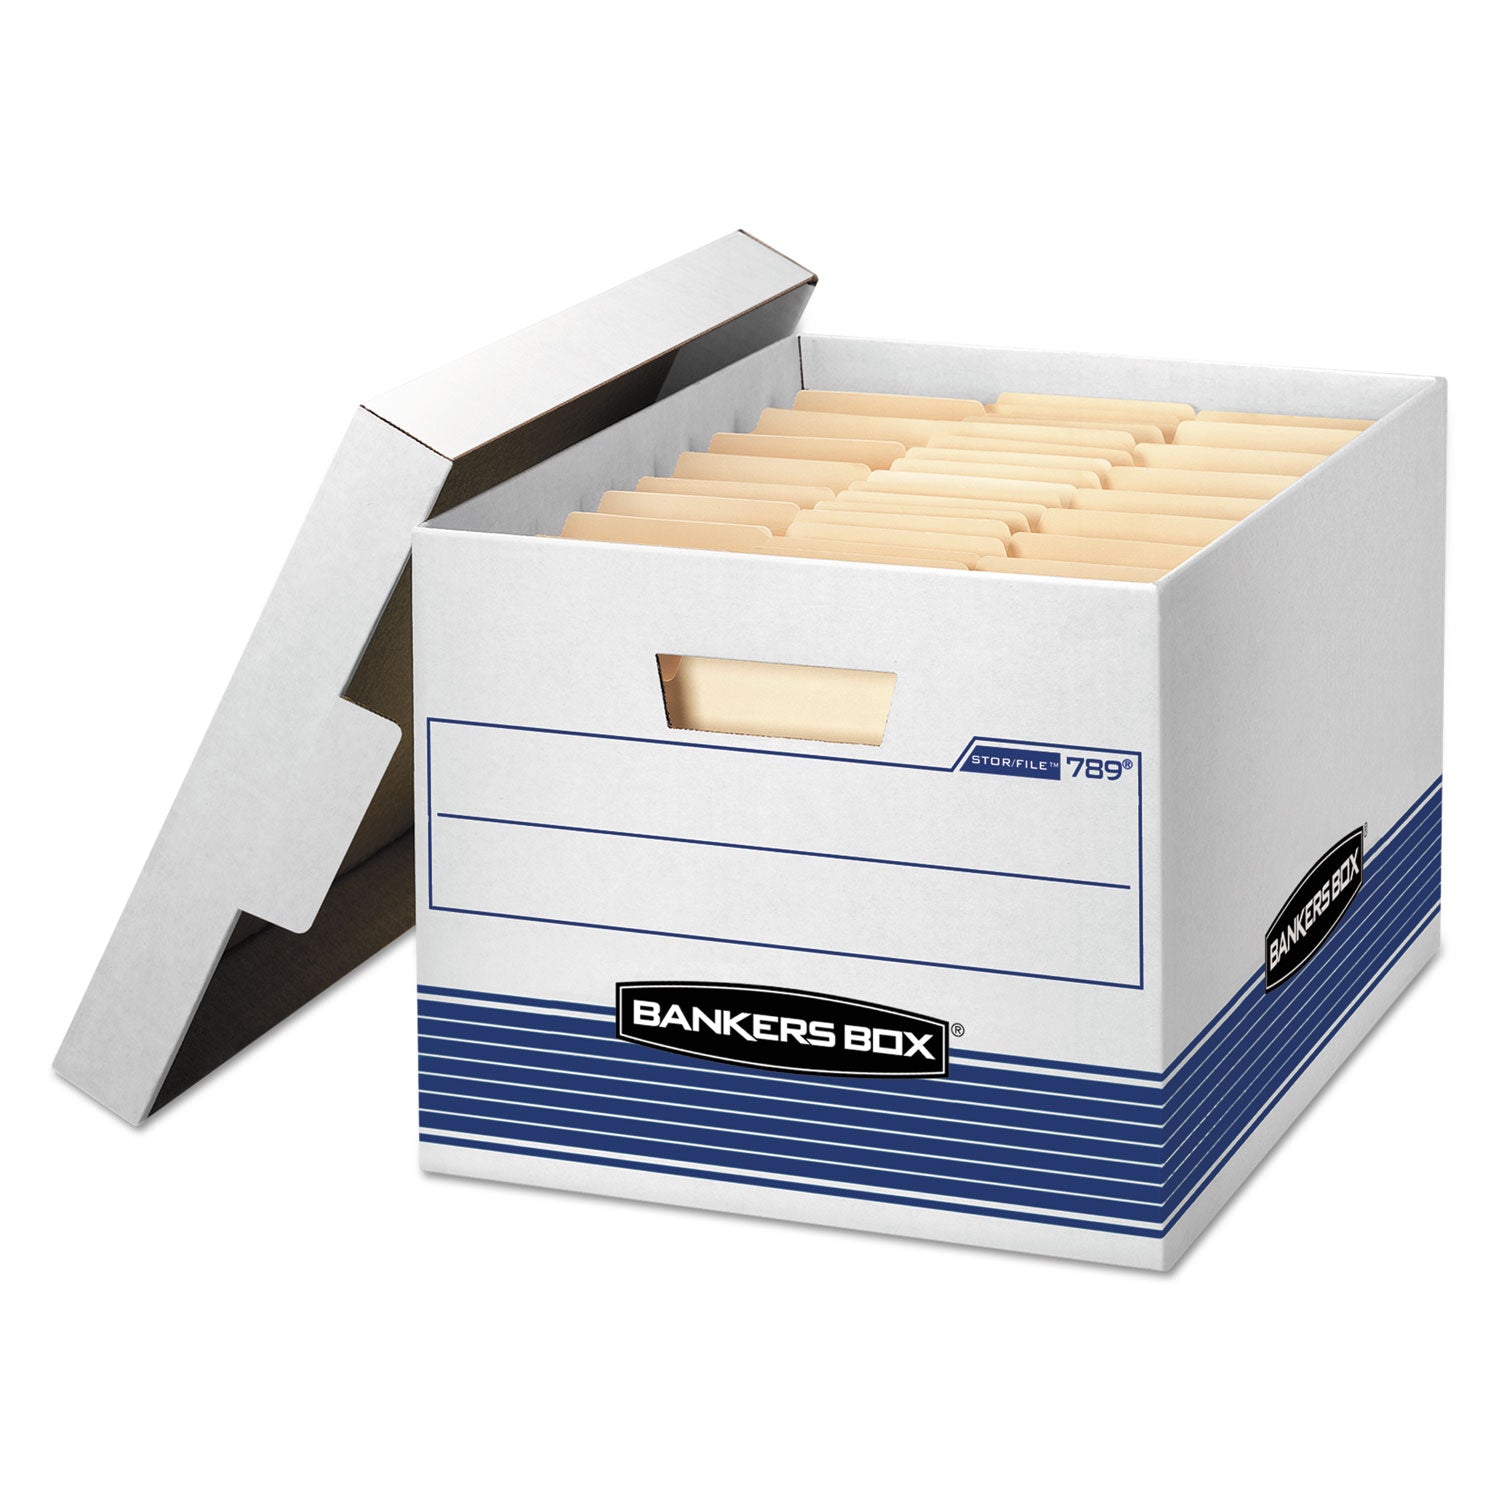 STOR/FILE Medium-Duty Letter/Legal Storage Boxes, Letter/Legal Files, 12.75" x 16.5" x 10.5", White/Blue, 12/Carton - 